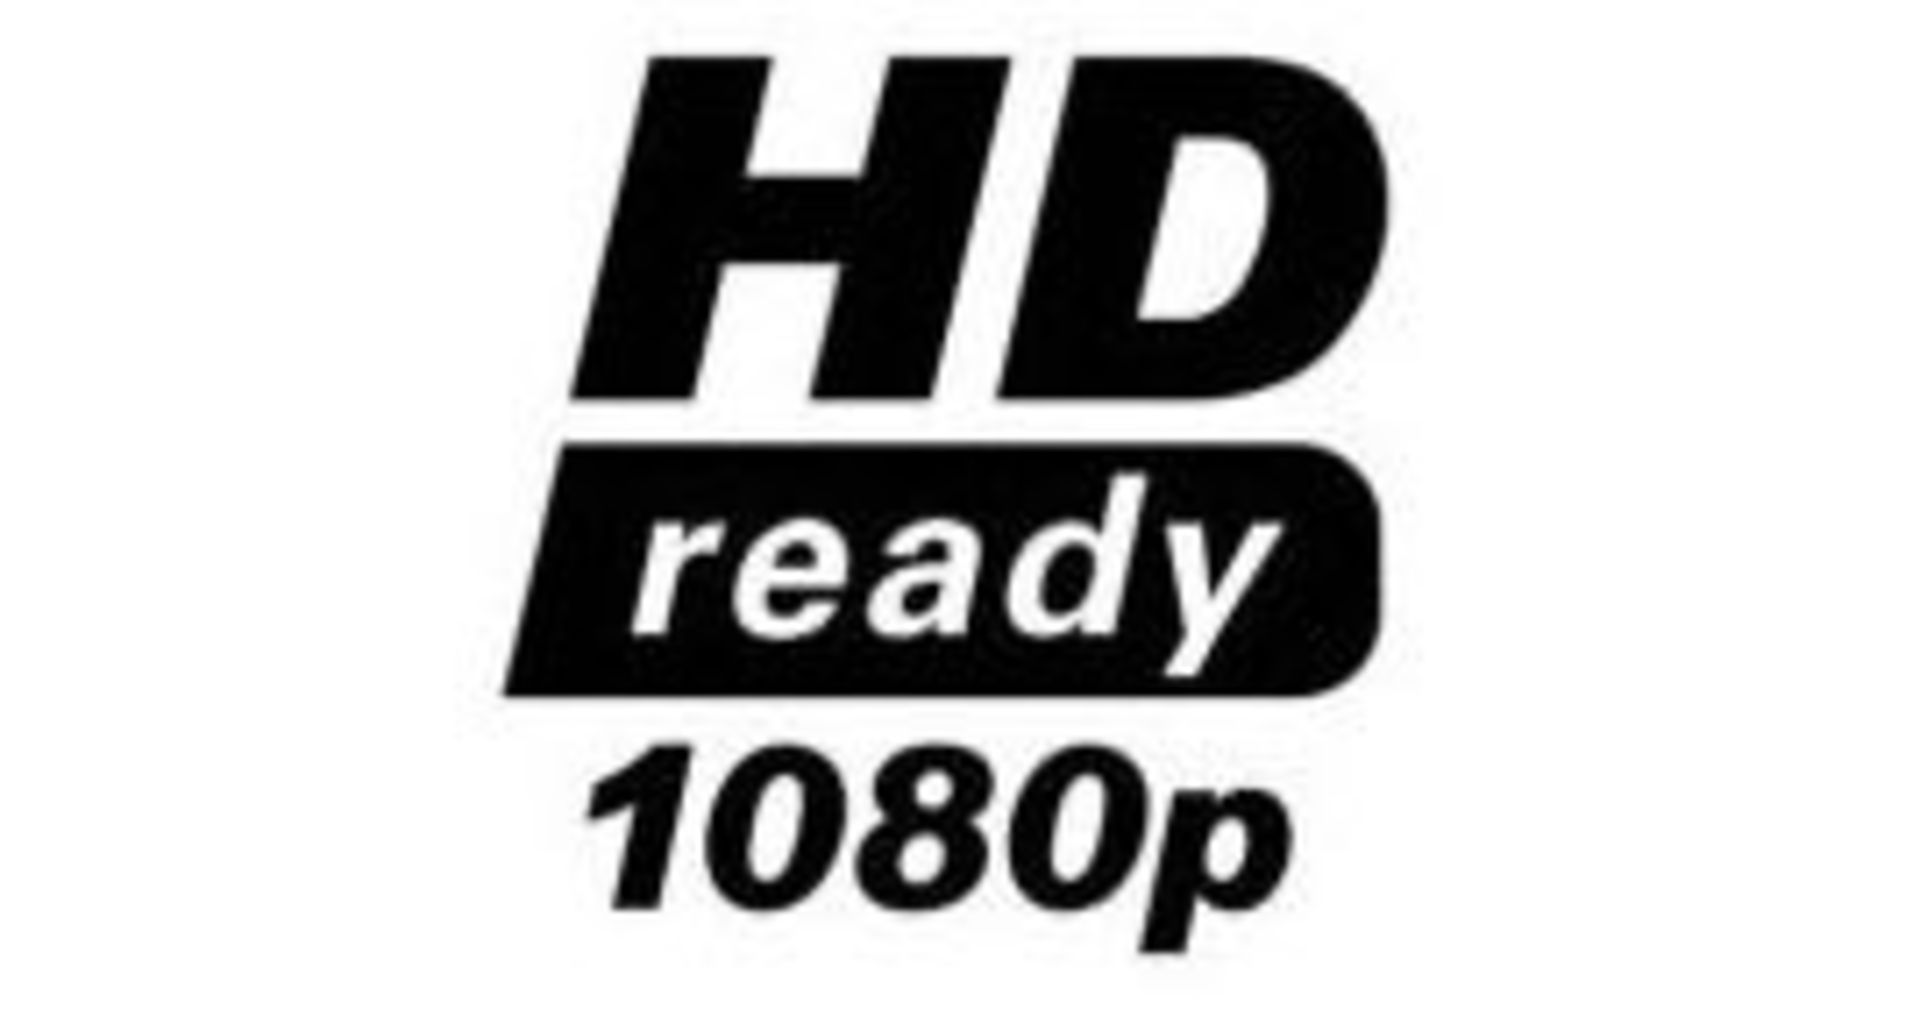 HD Ready 720p